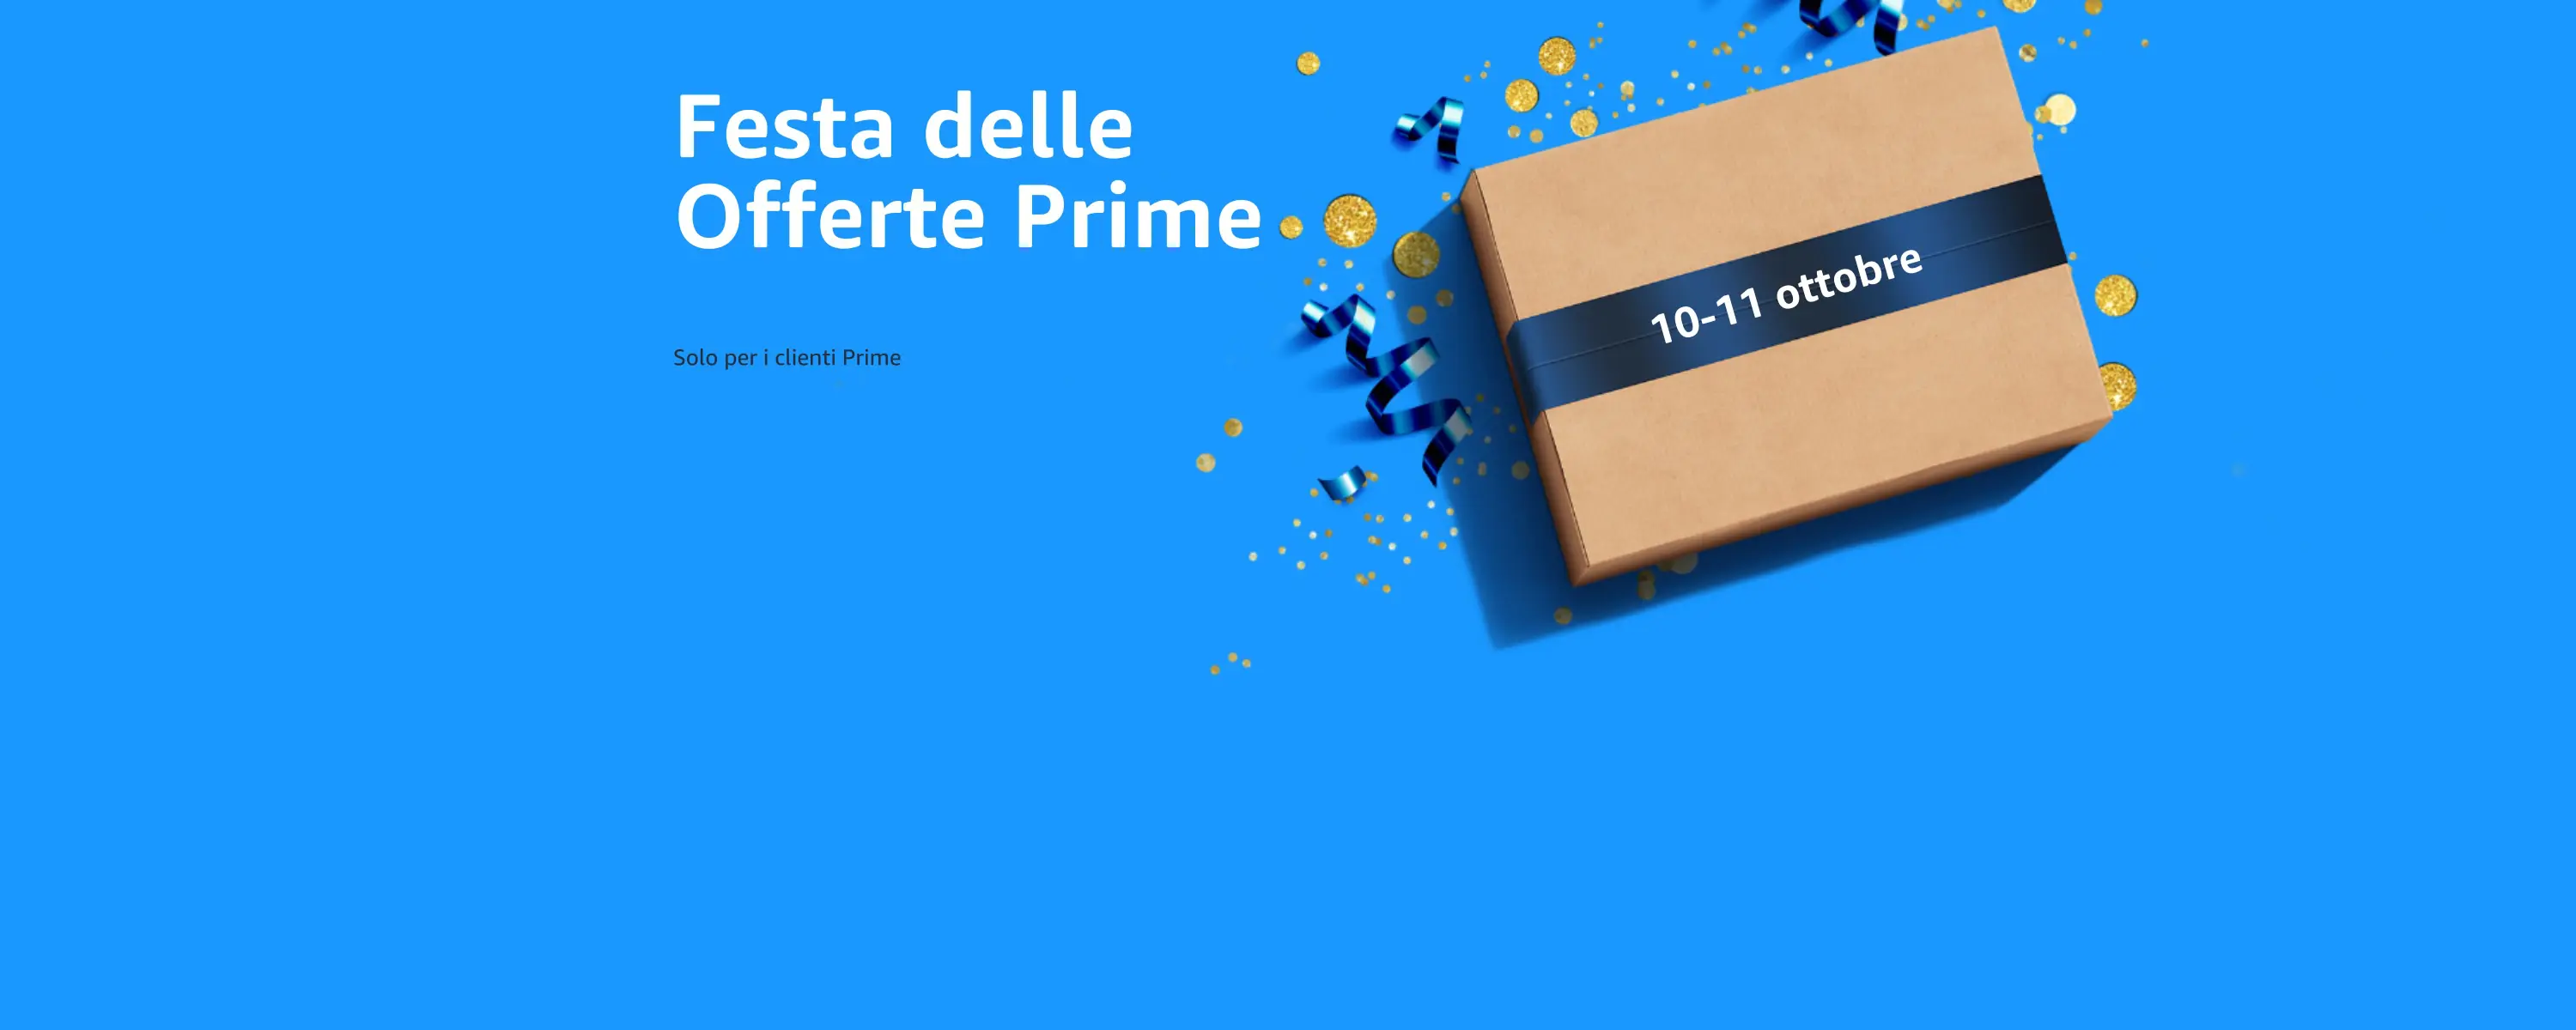 Offerte Amazon Prime 10-11 ottobre